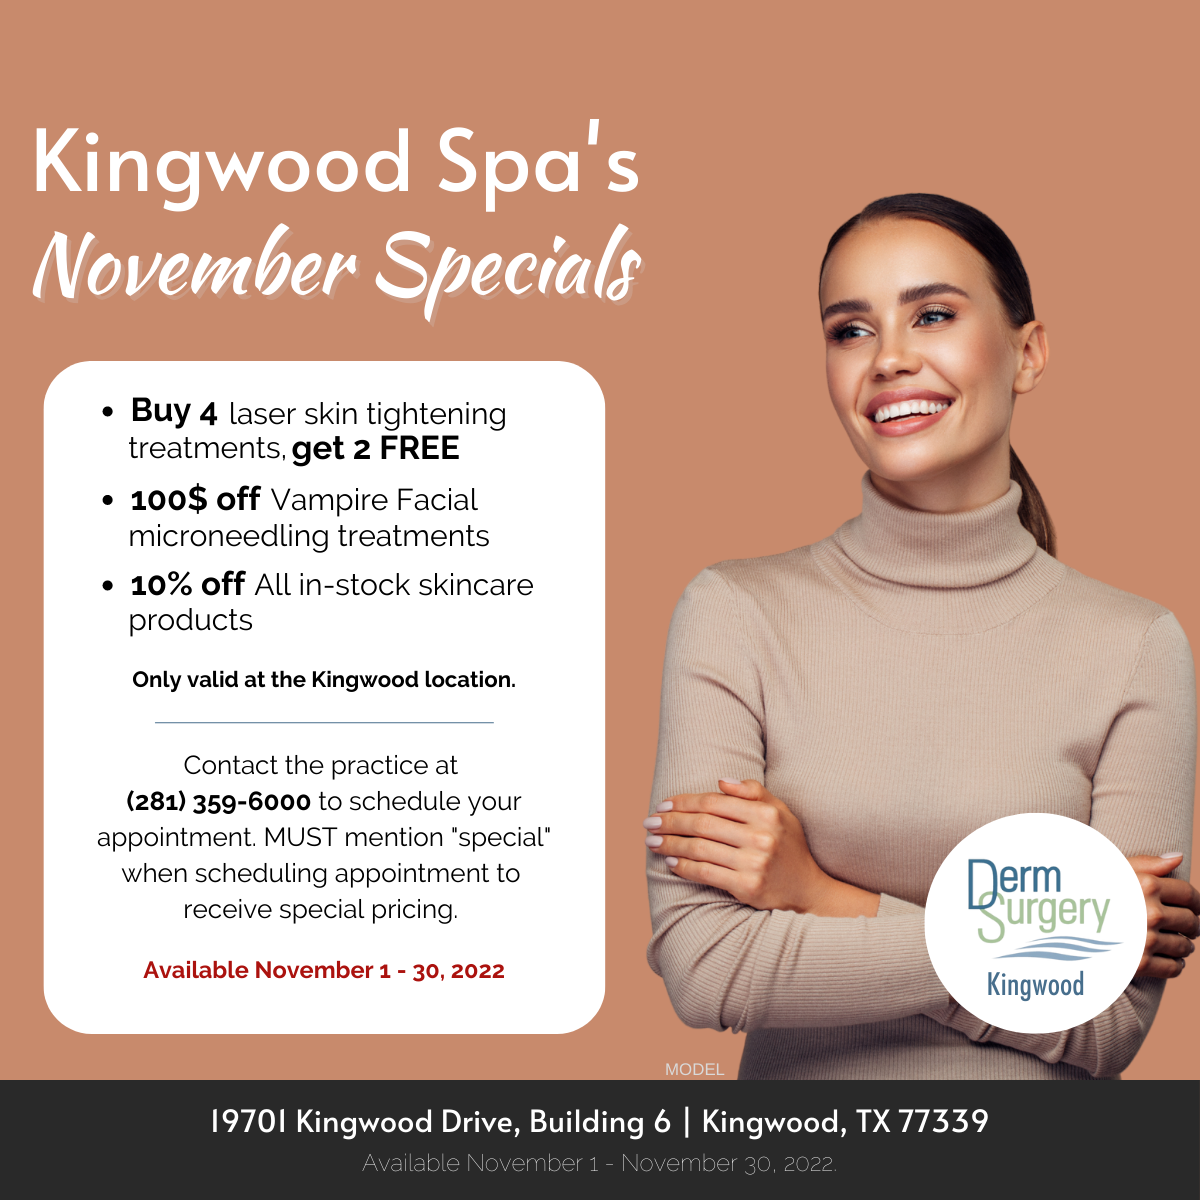 Kingwood Spa's November Specials 2022